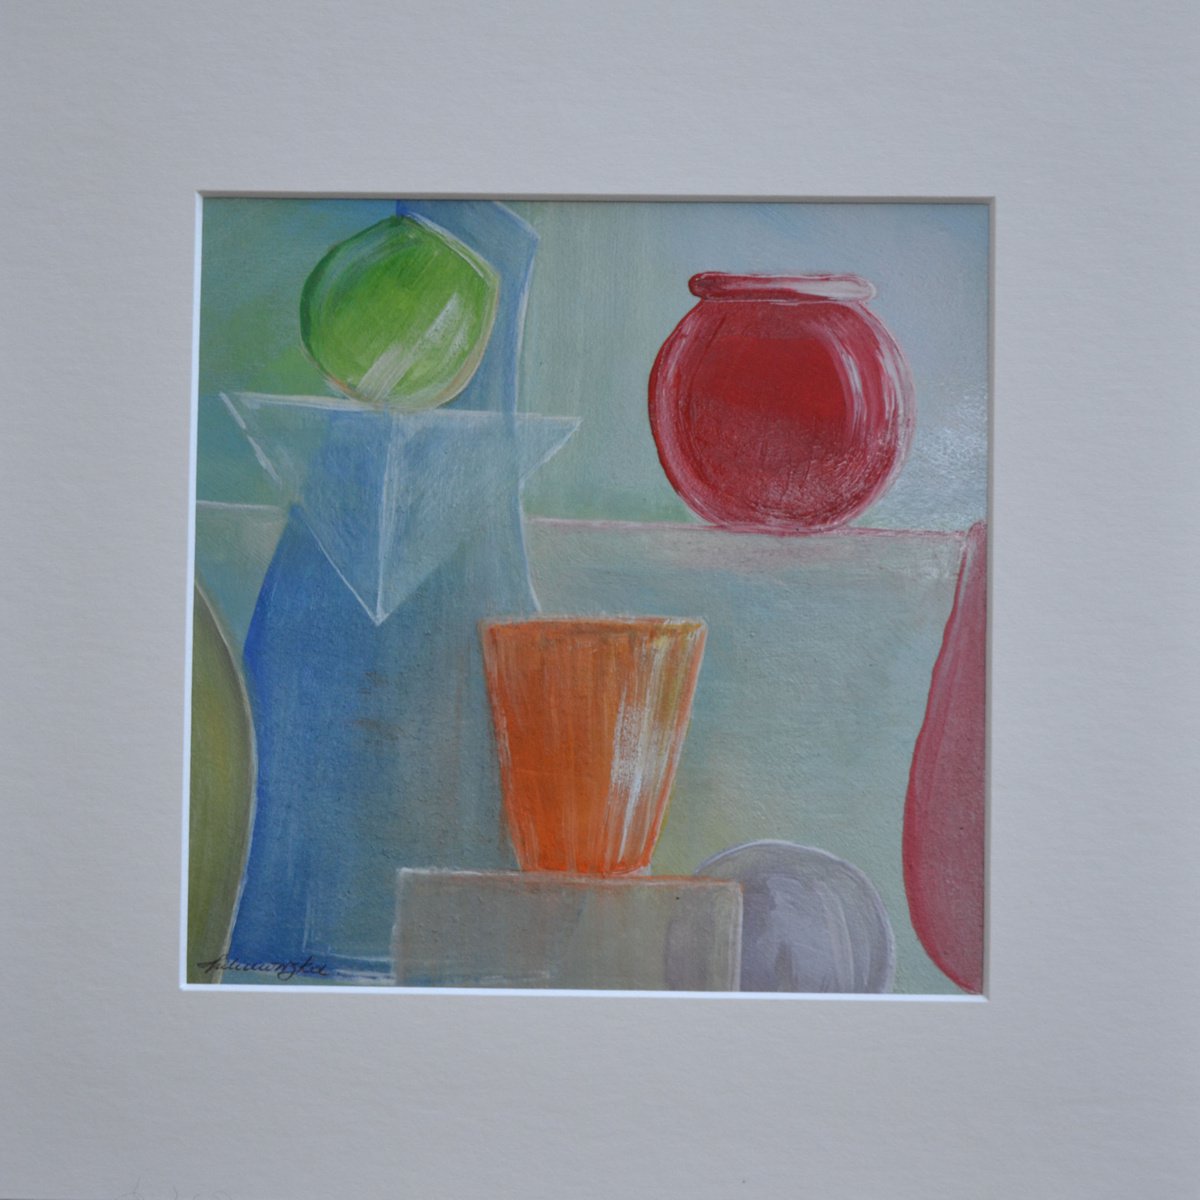 Coloured Glass by Maja Tulimowska - Chmielewska